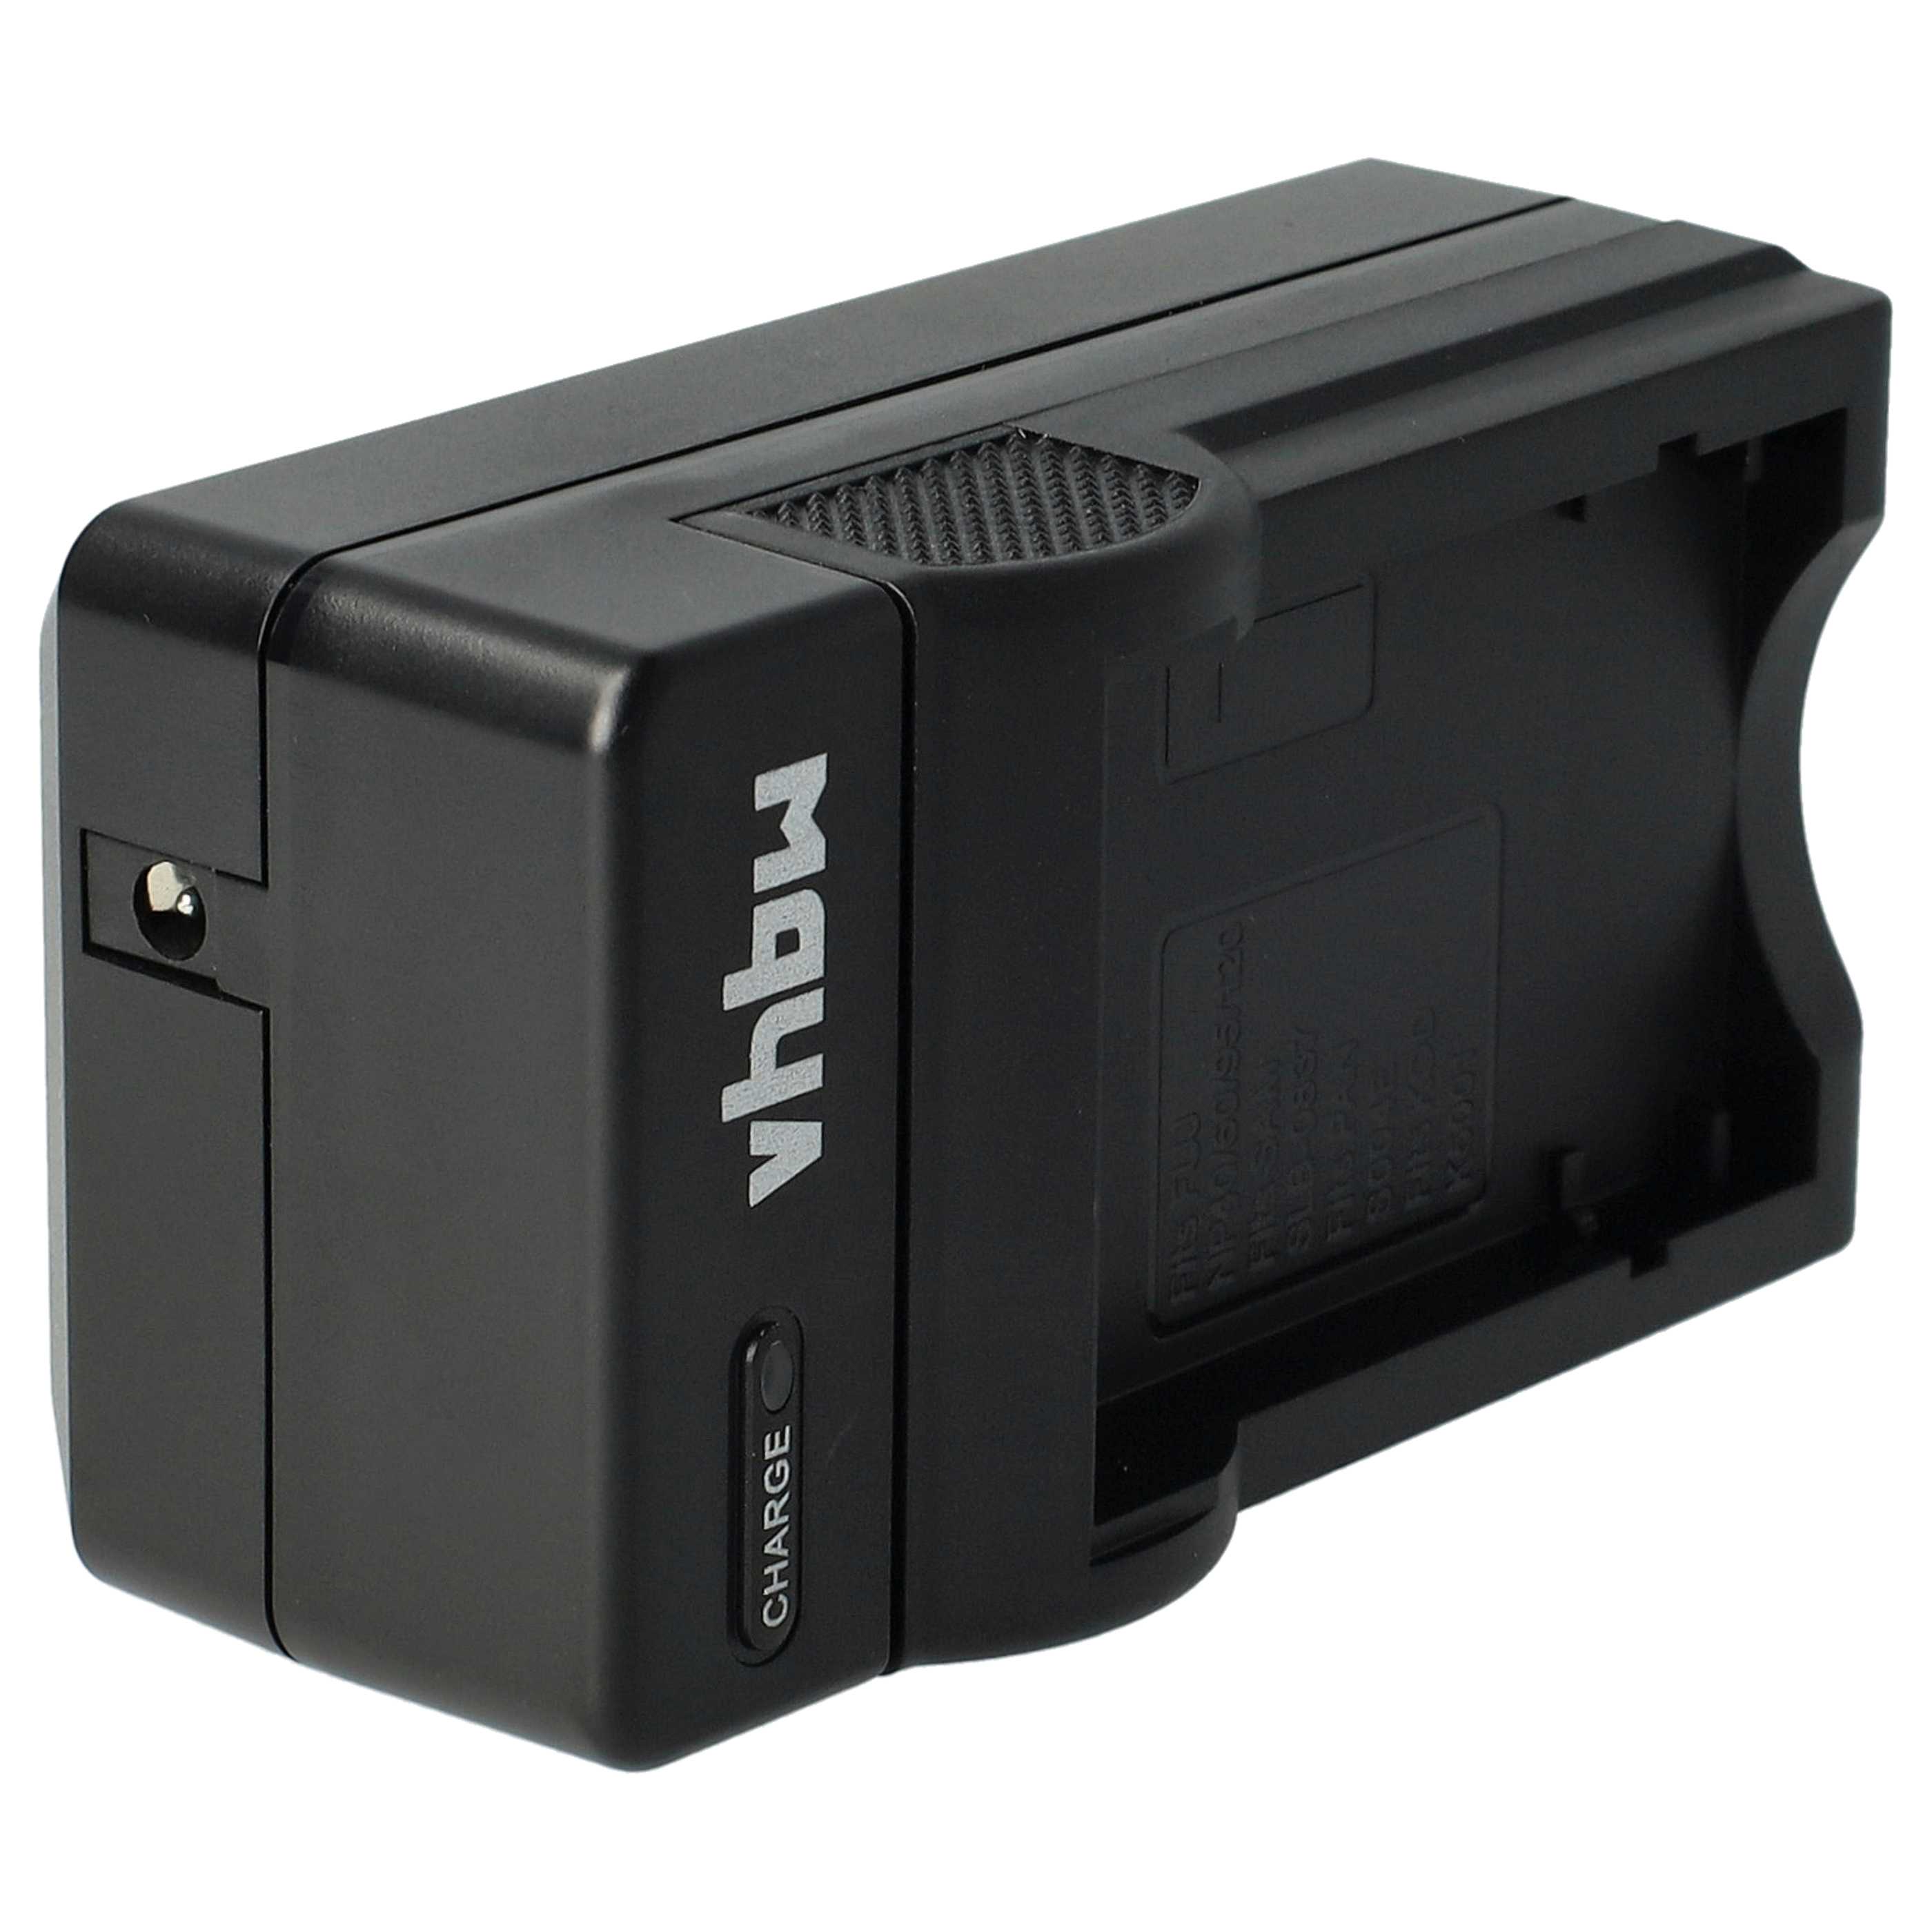 Battery Charger suitable for Praktica Digital Camera - 0.6 A, 4.2 V